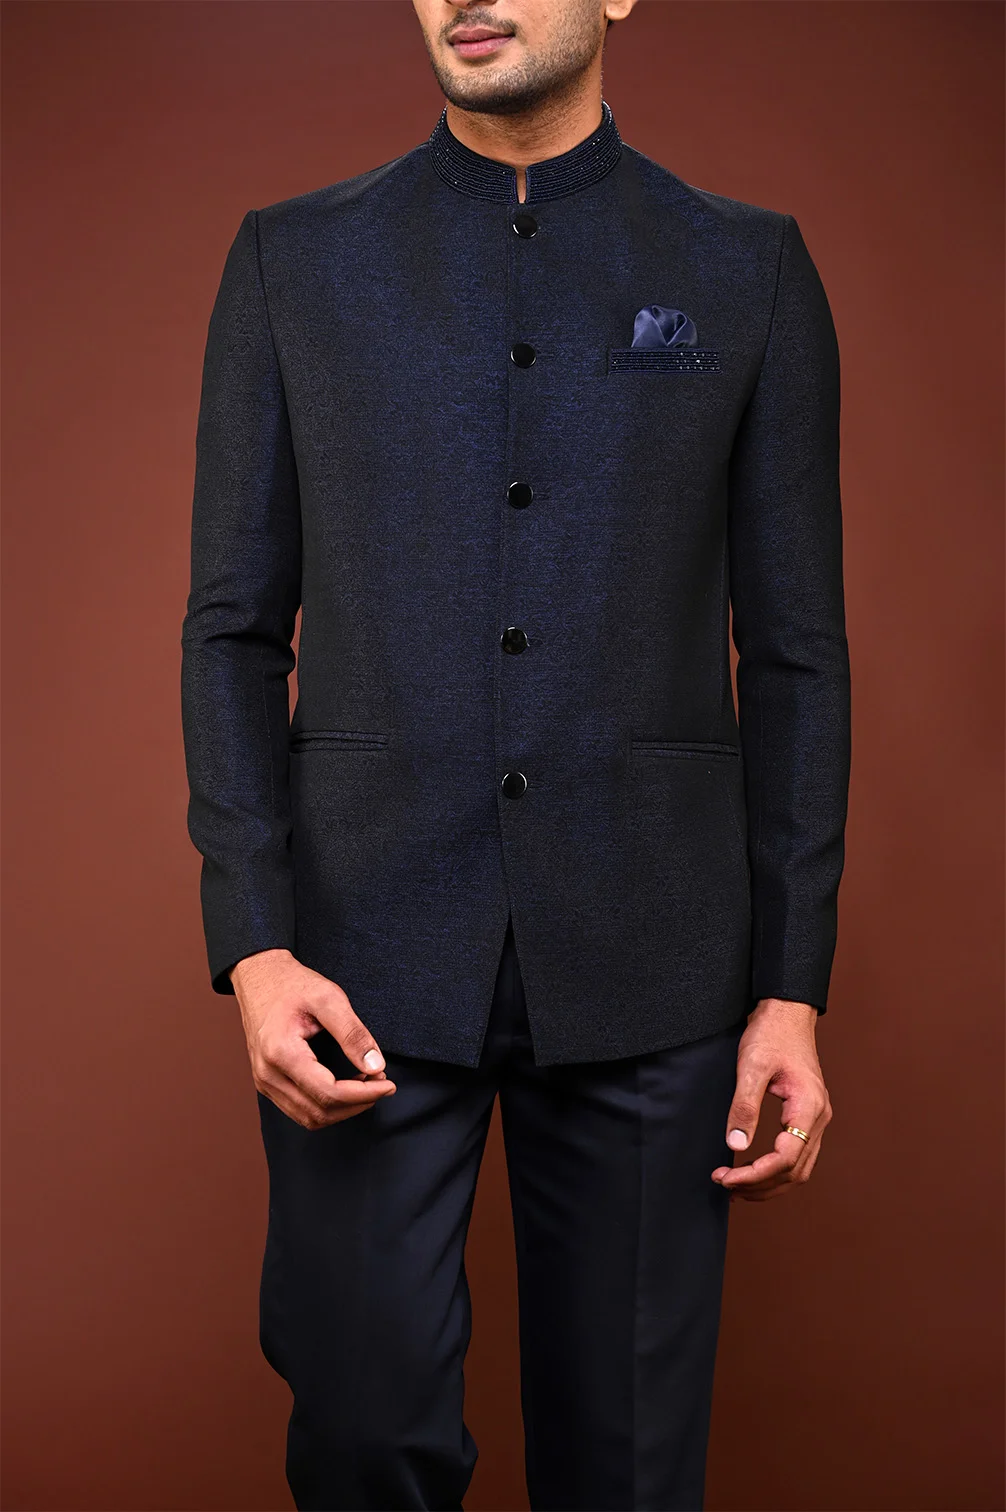 Navy Blue XL Jodhpuri Suit, Linen at Rs 2250 in Surat | ID: 27491850197